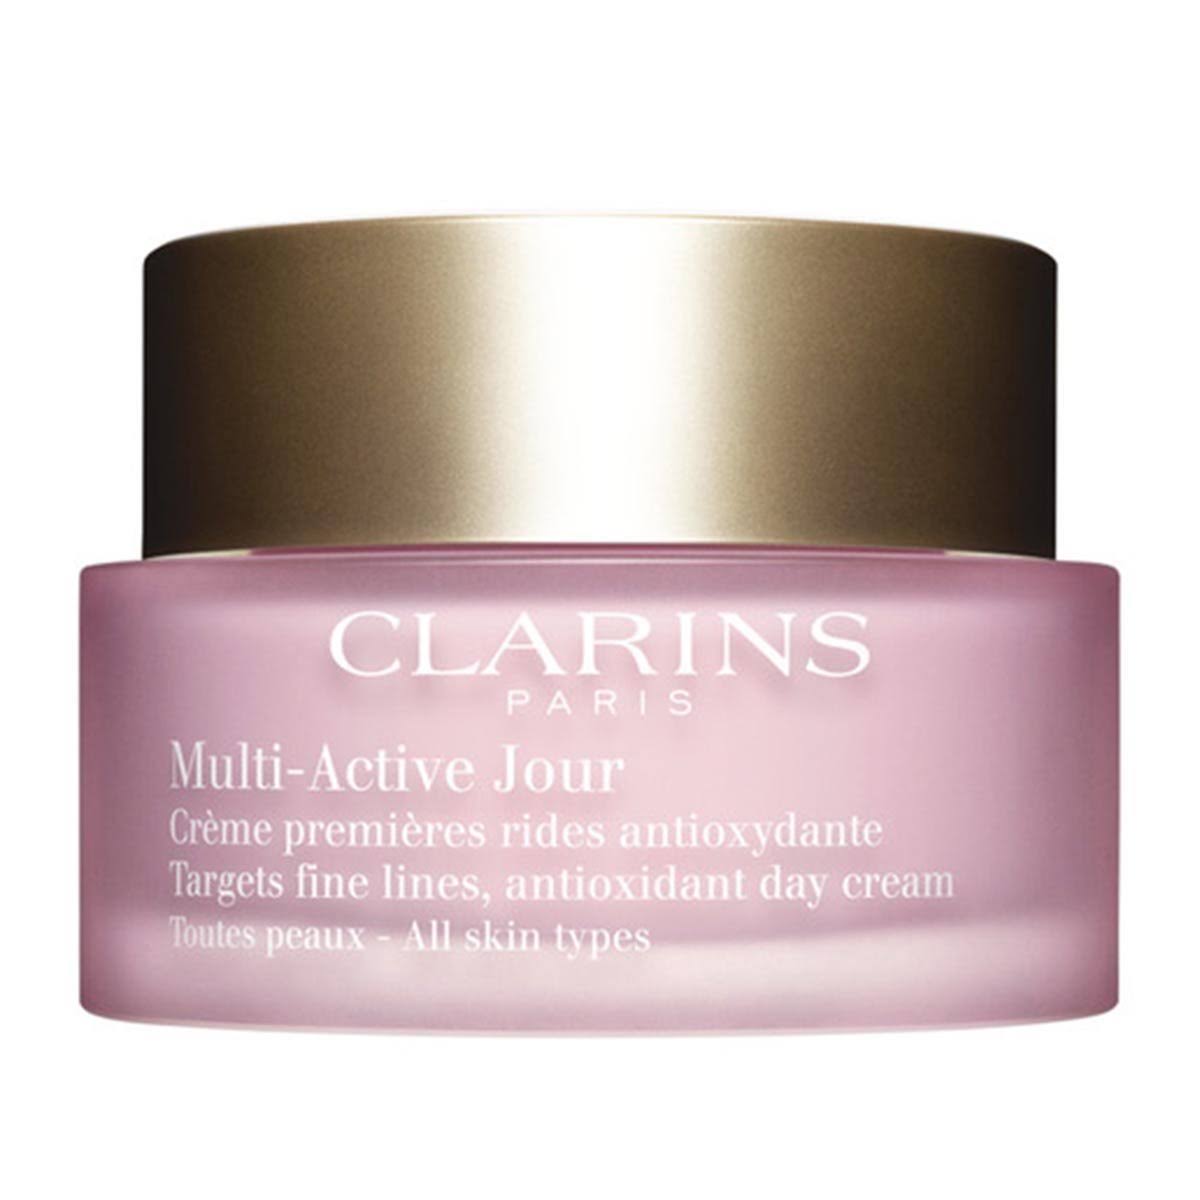 Clarins Multi-Active Jour Antioxidant Day Cream